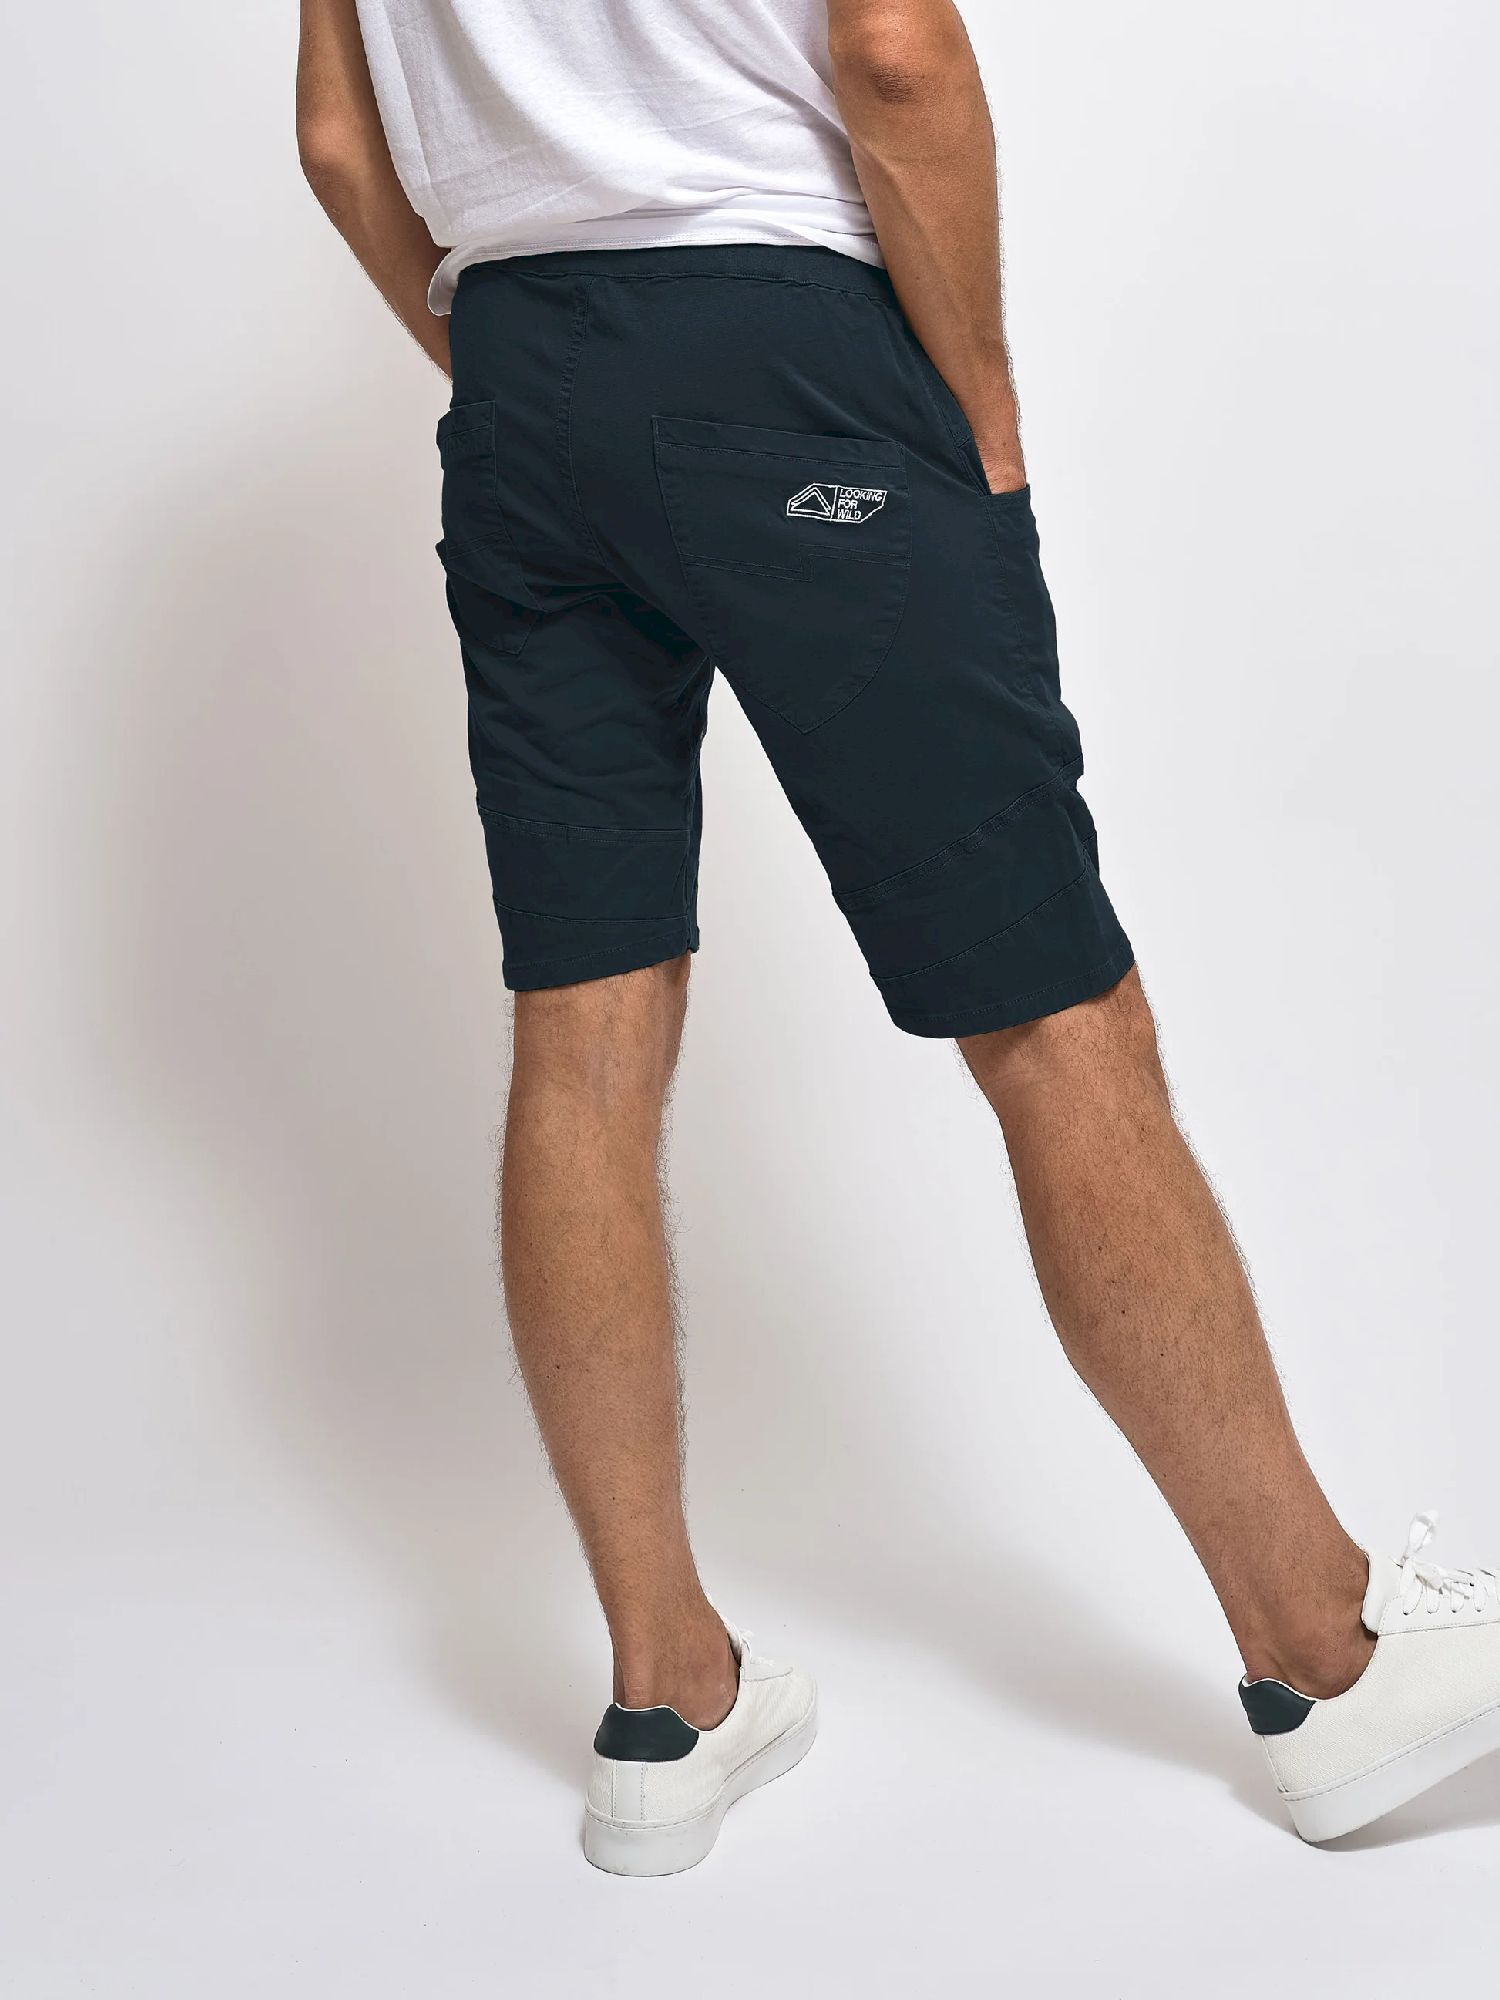 Looking For Wild Cilaos - Climbing shorts - Men's | Hardloop